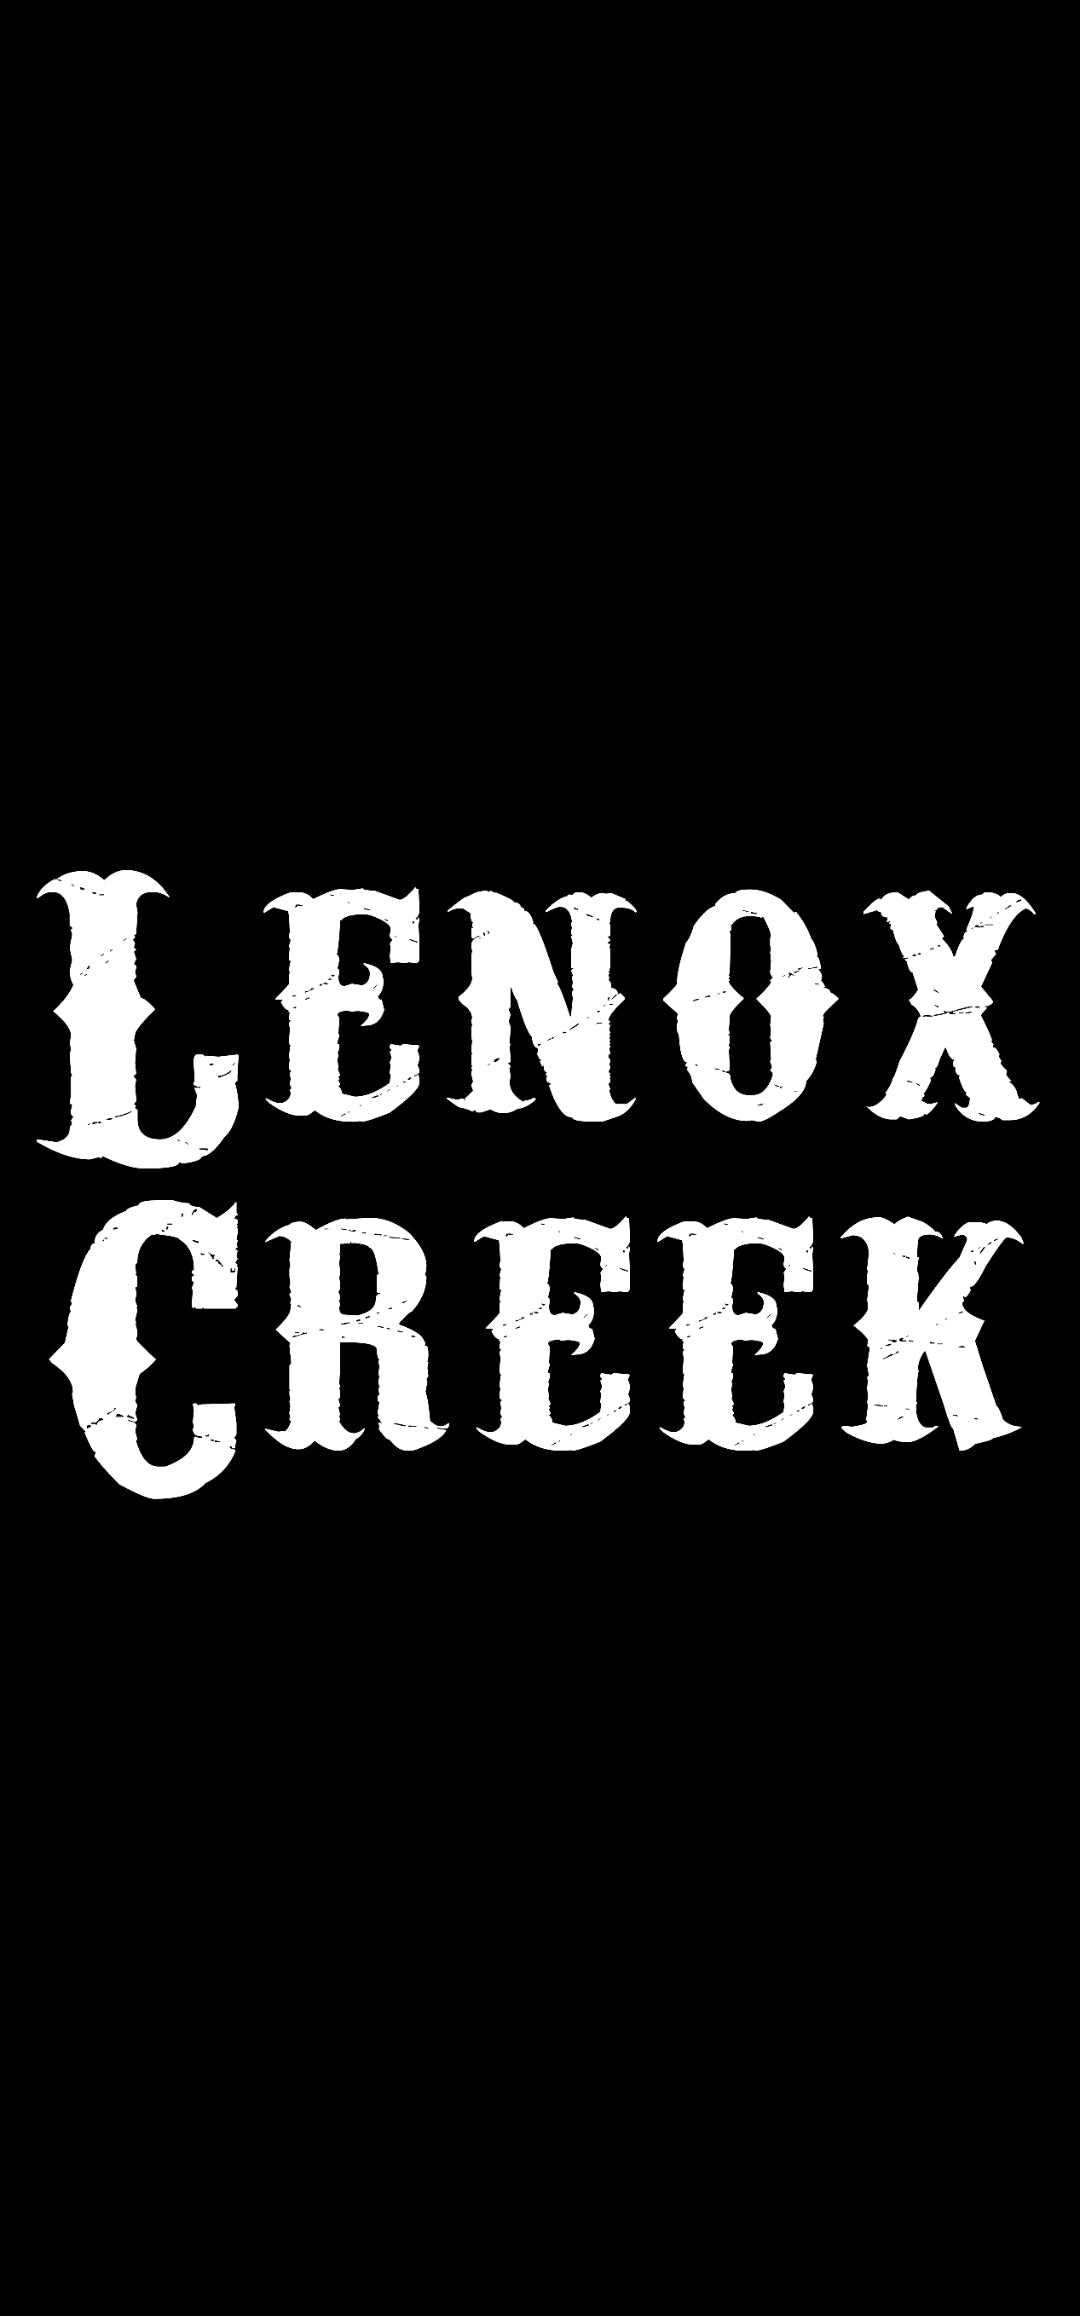 Lenox Creek logo shirt